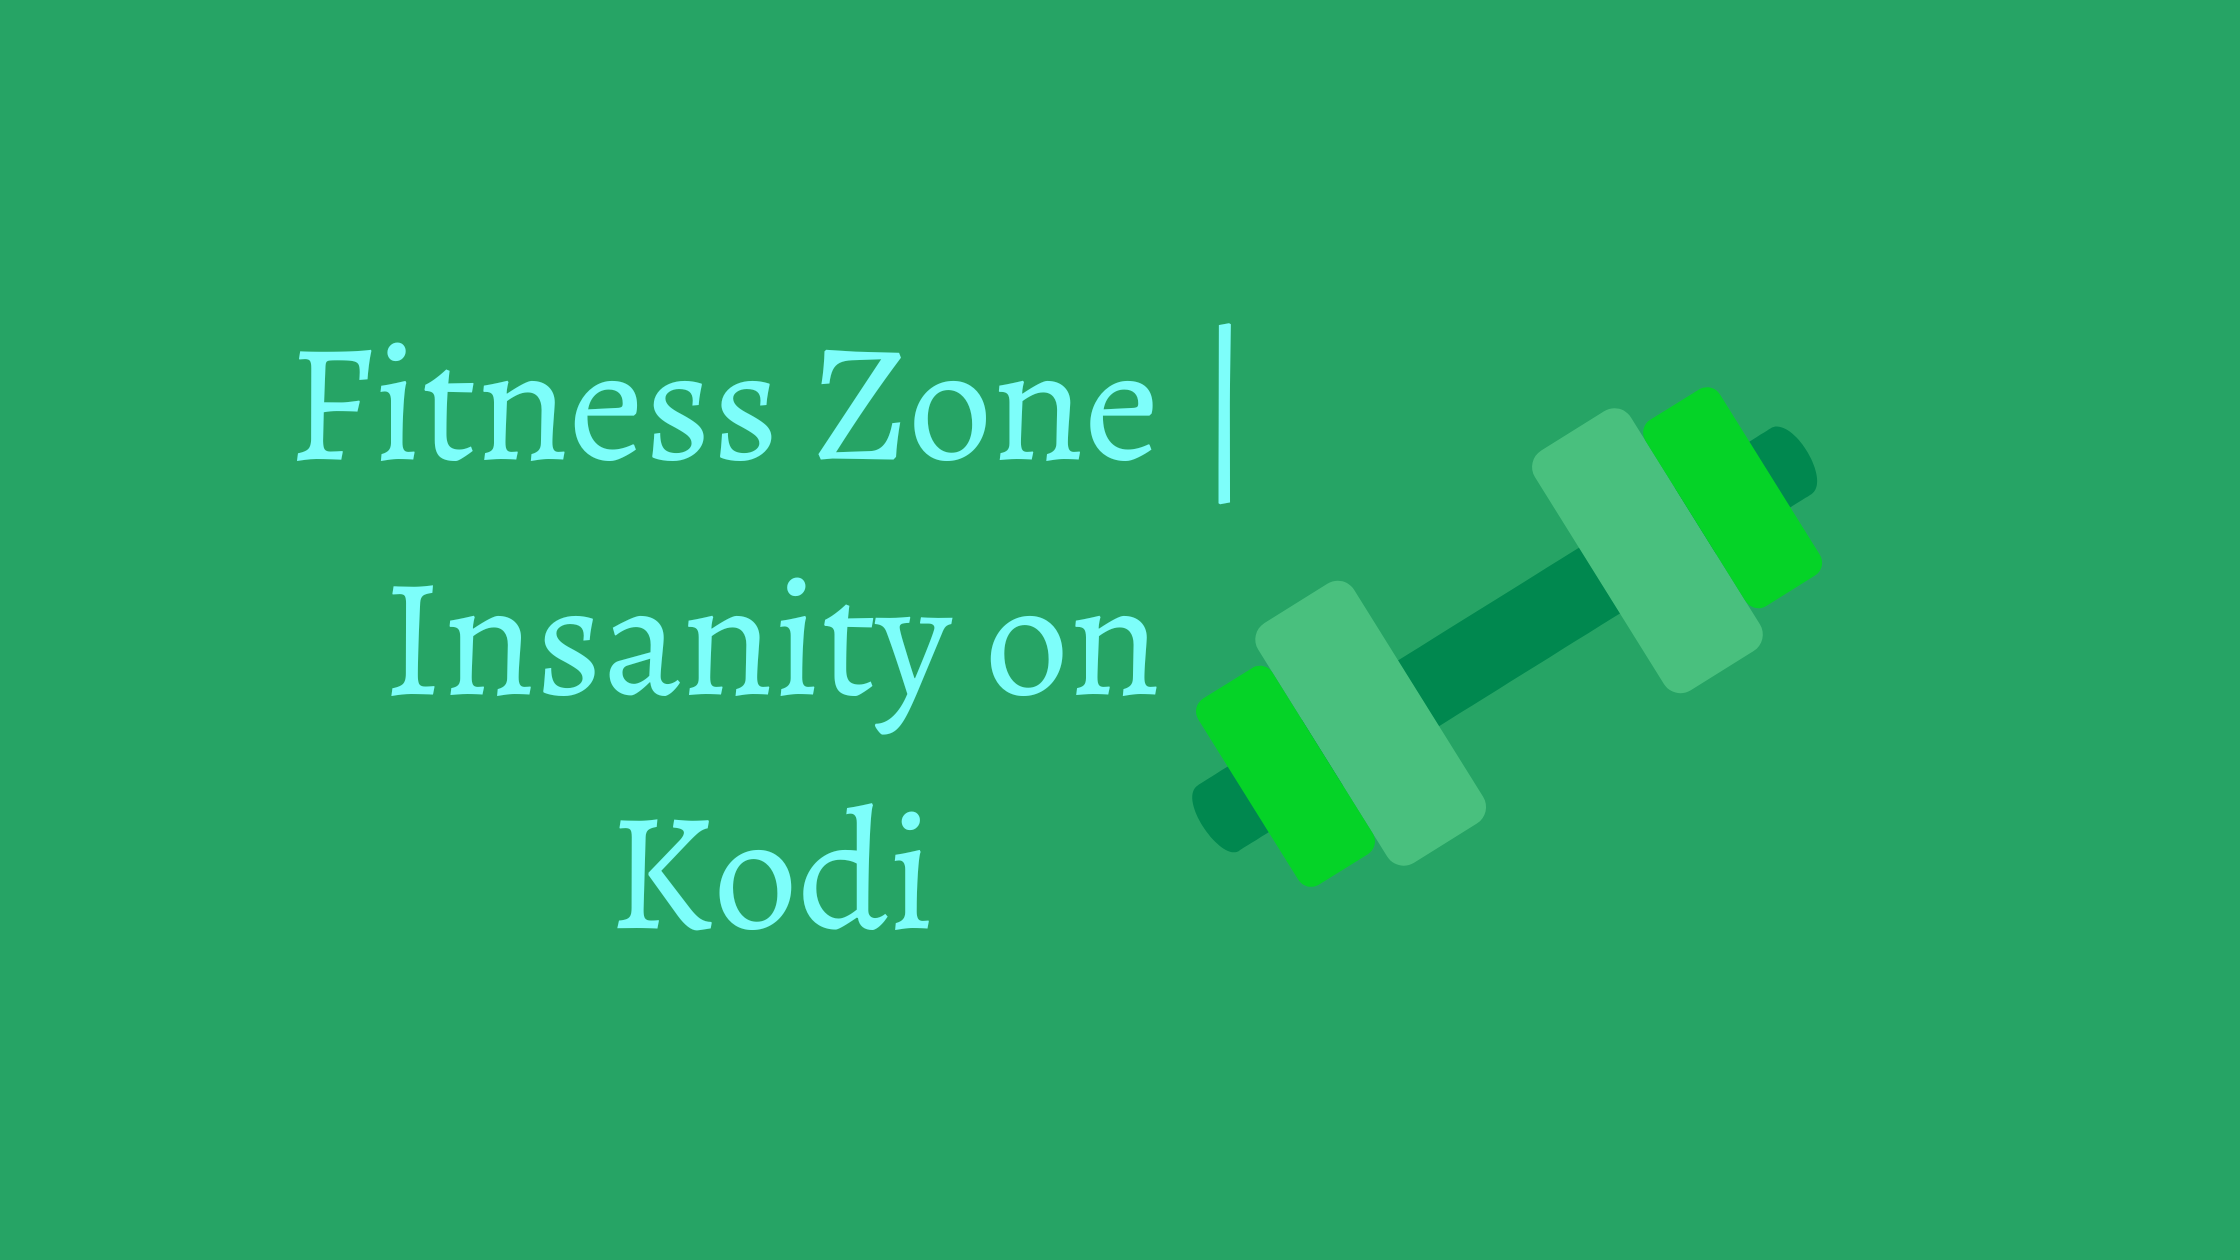 Fitness Zone Insanity on Kodi